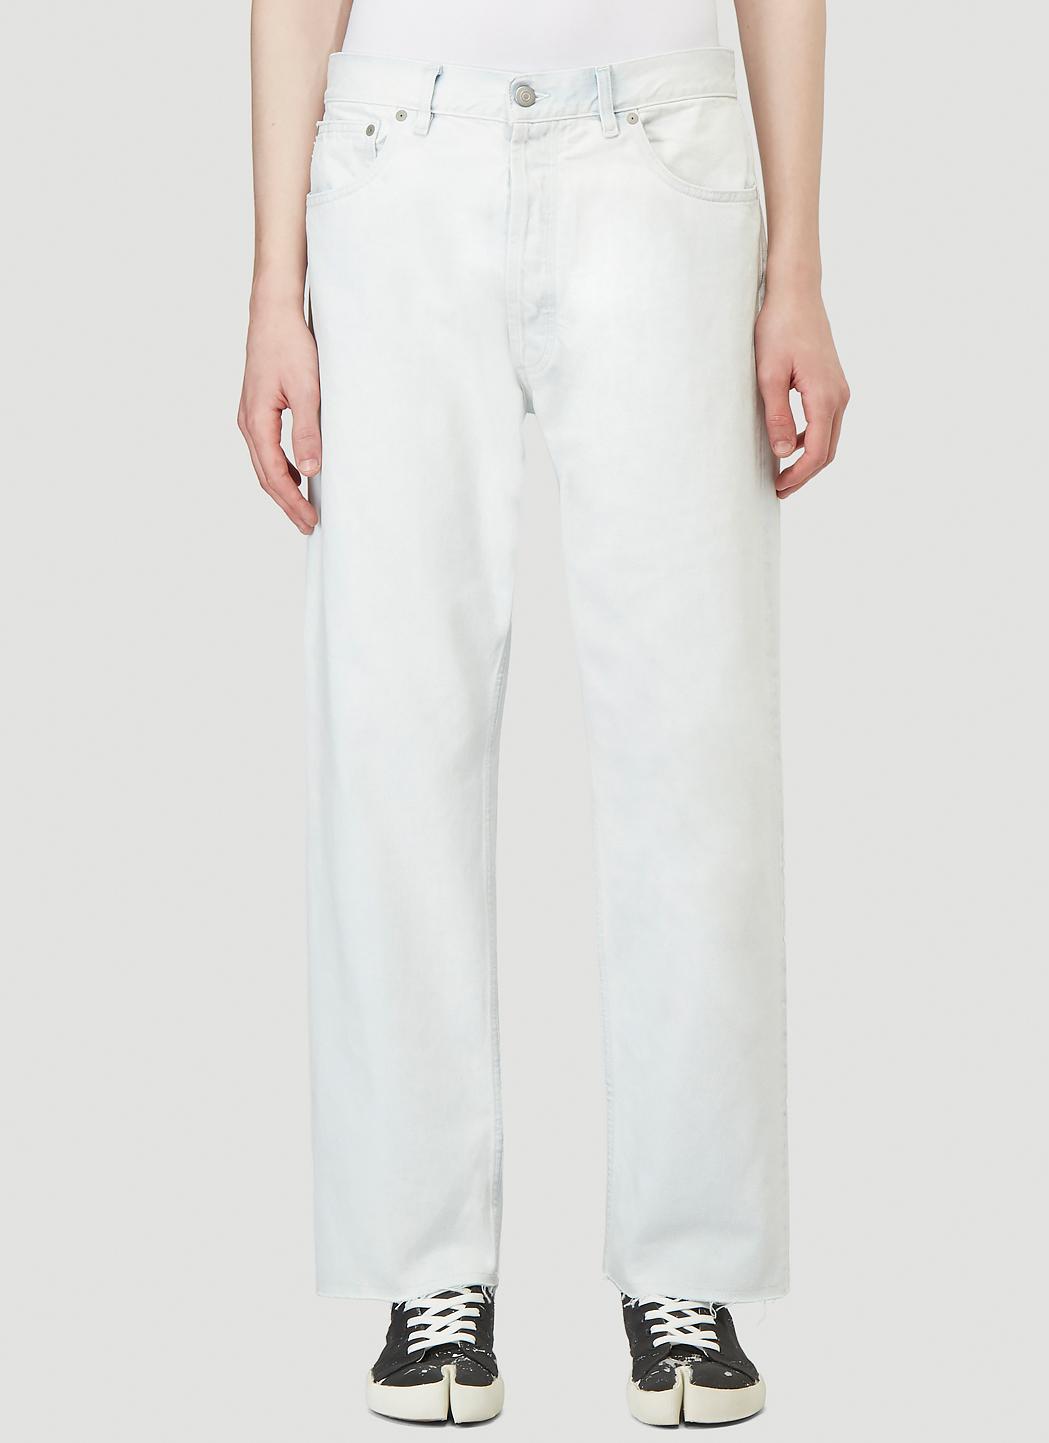 Maison Margiela Denim Wide-leg Bleached Jeans In White for Men - Lyst